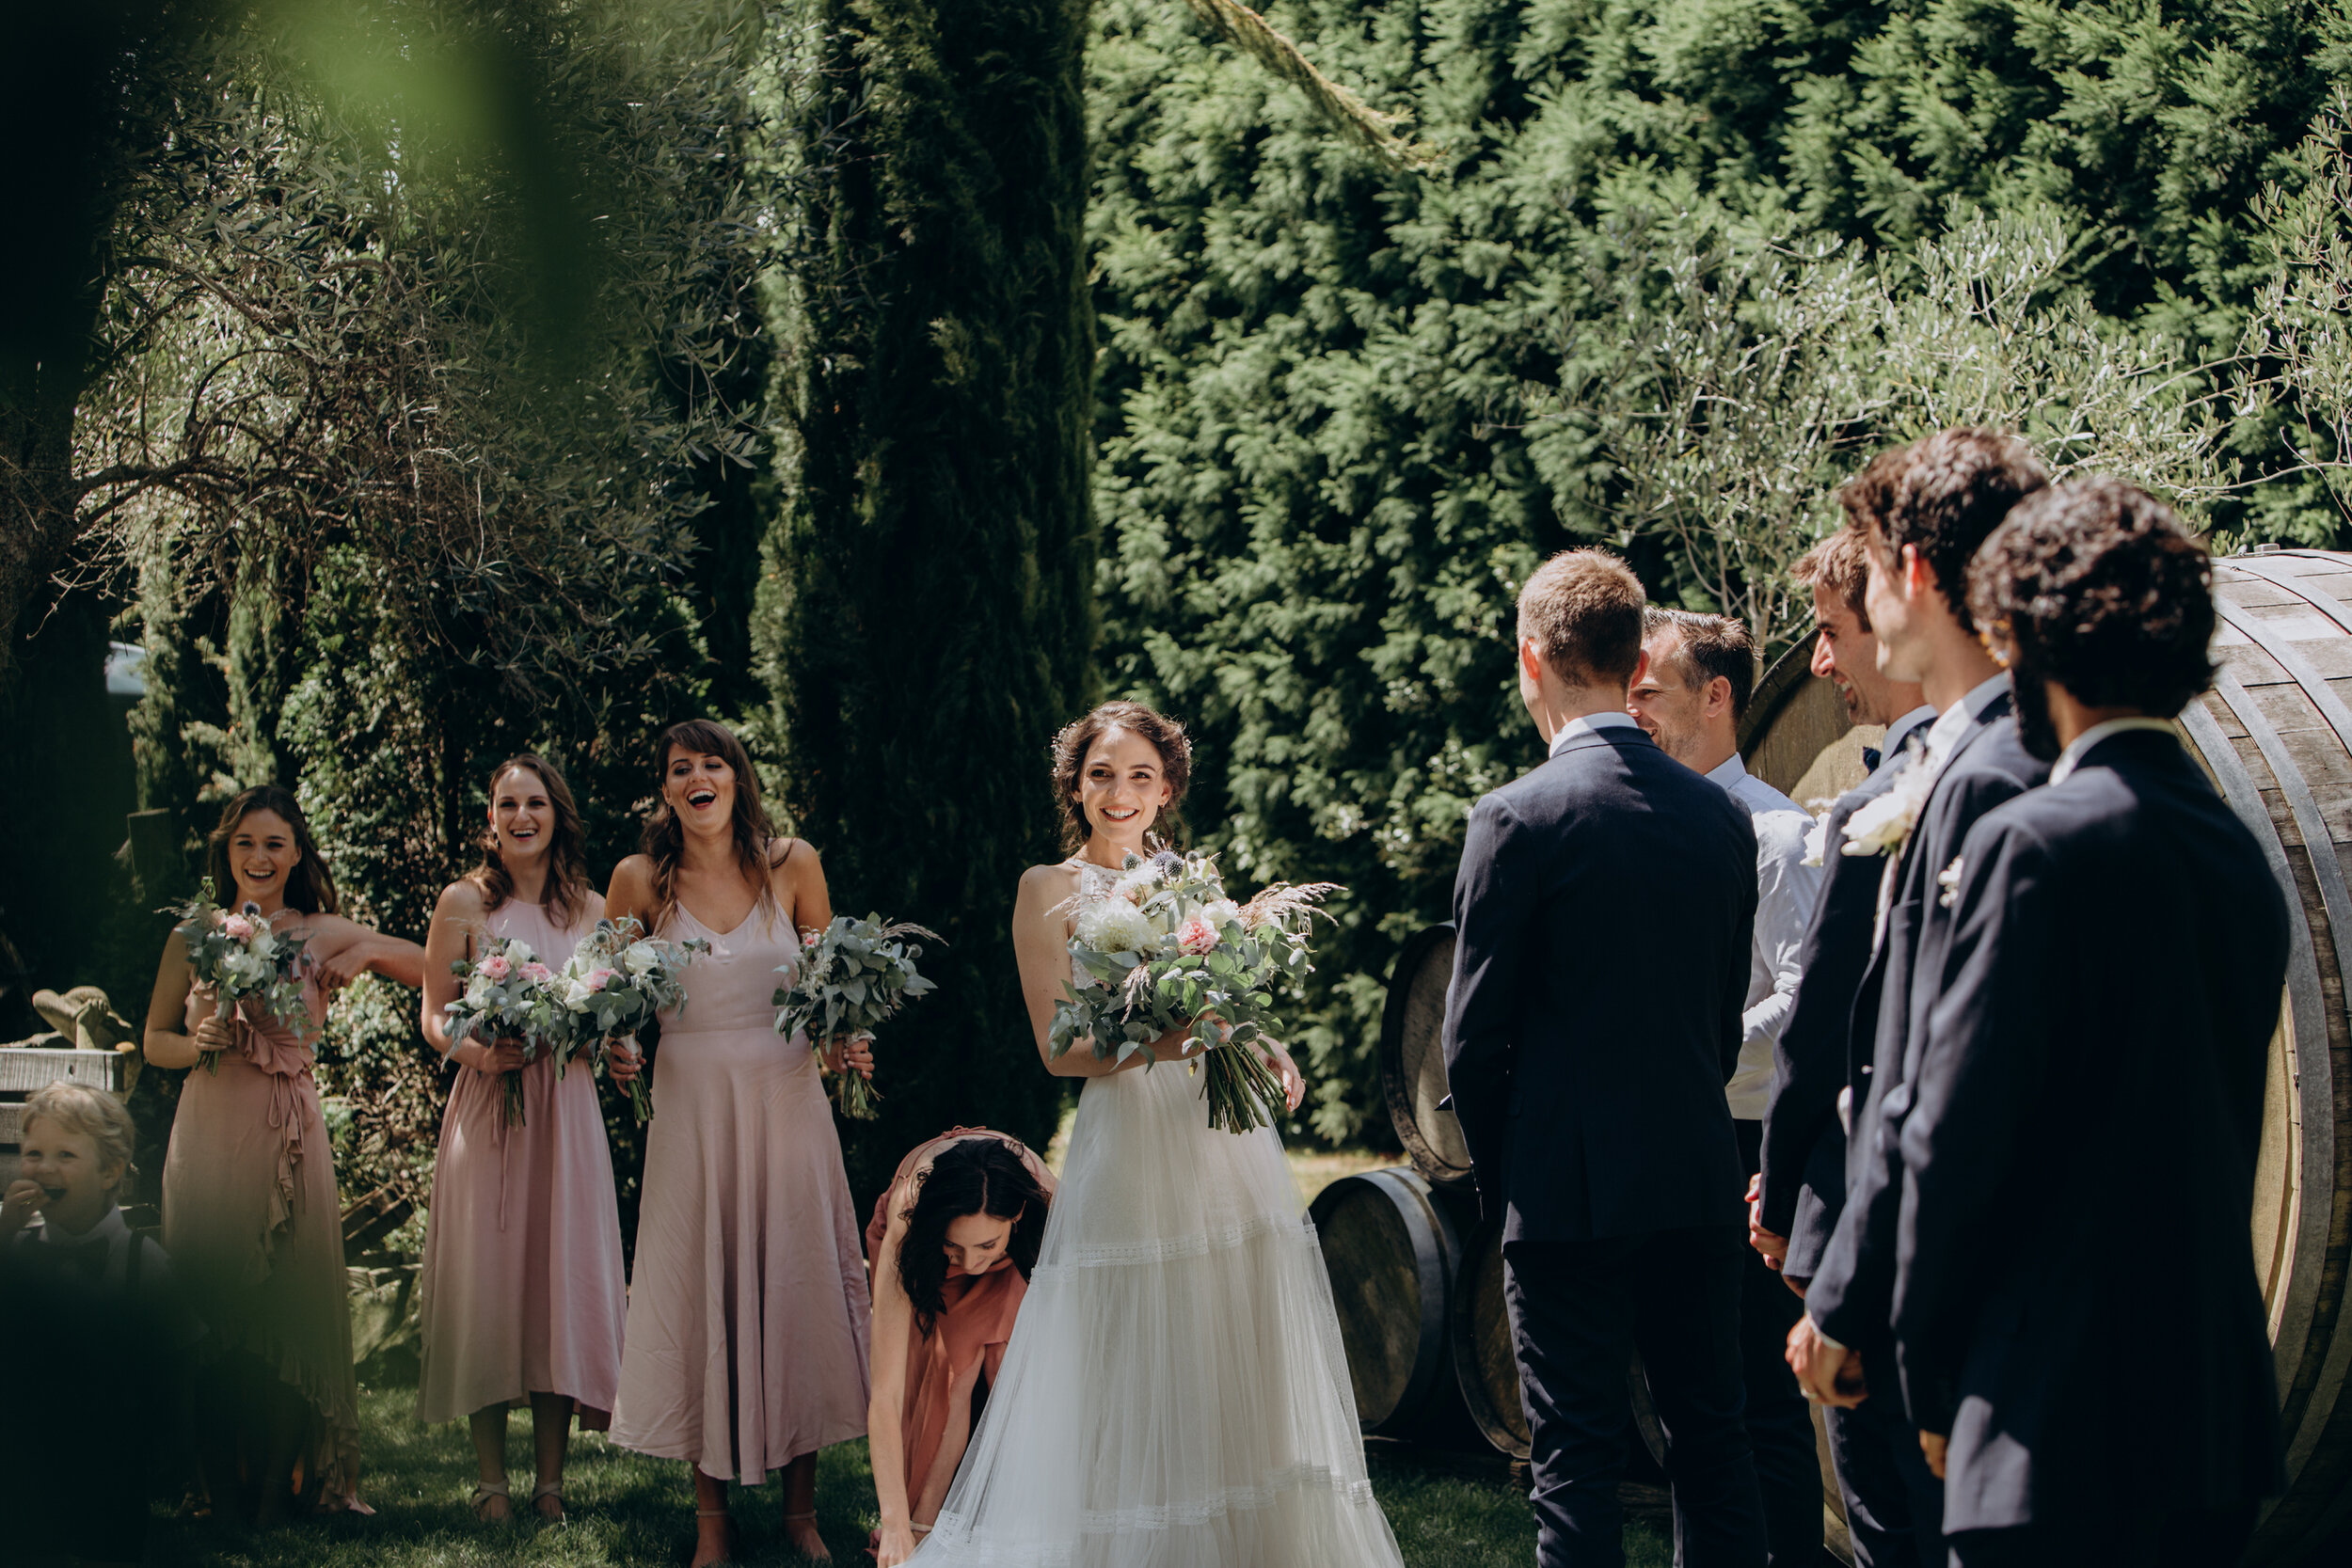 Markovina vineyard estate | Auckland wedding photographer | New Zealand wedding packages | Auckland photography | West auckland Kumeu wedding | NZ wedding photographer